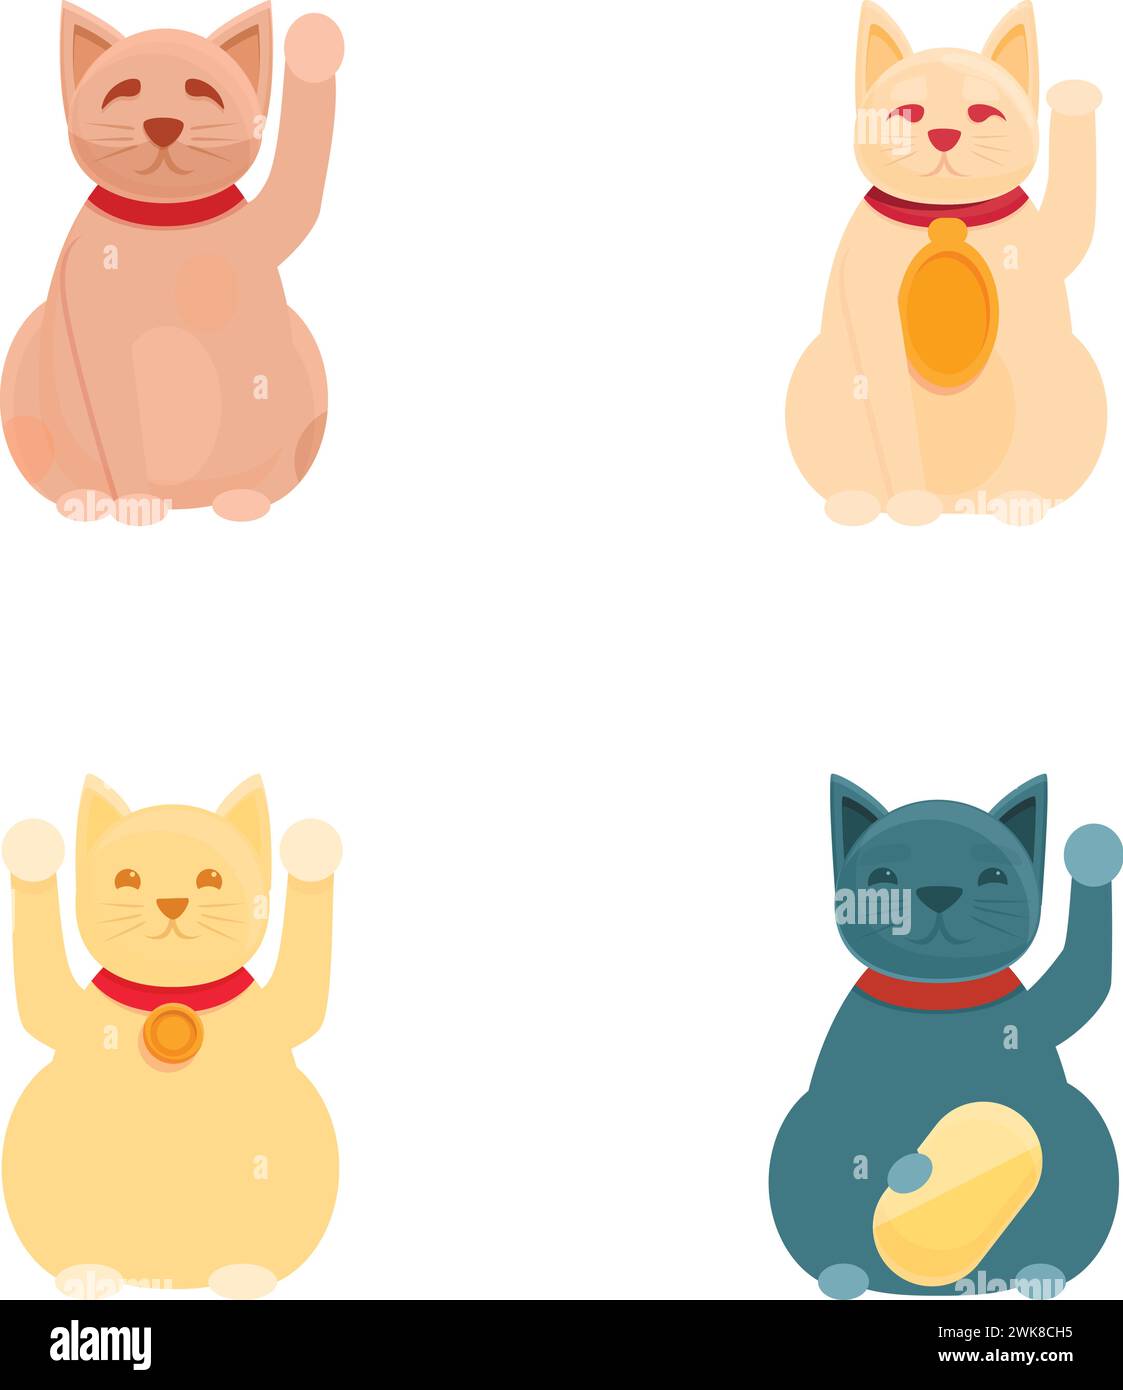 Lucky cat icons set cartoon vector. Japanese cat maneki neko with raised paw. Asian figurine for good luck Stock Vector